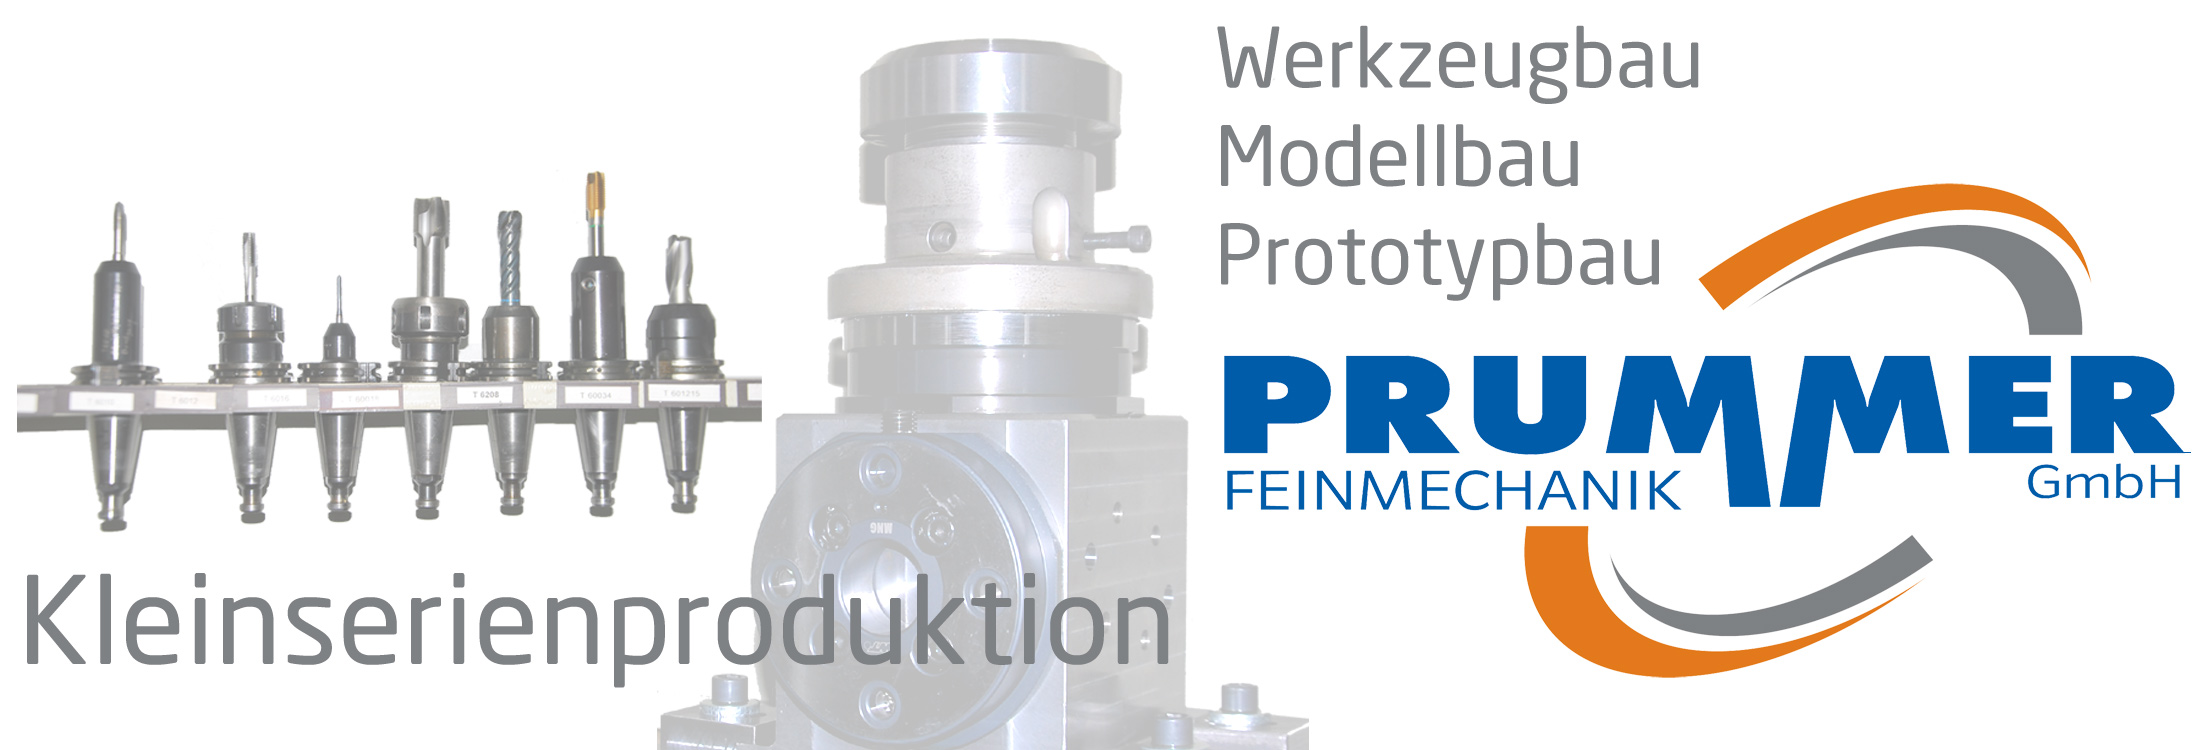 Prummer Feinmechanik GmbH Portfolio